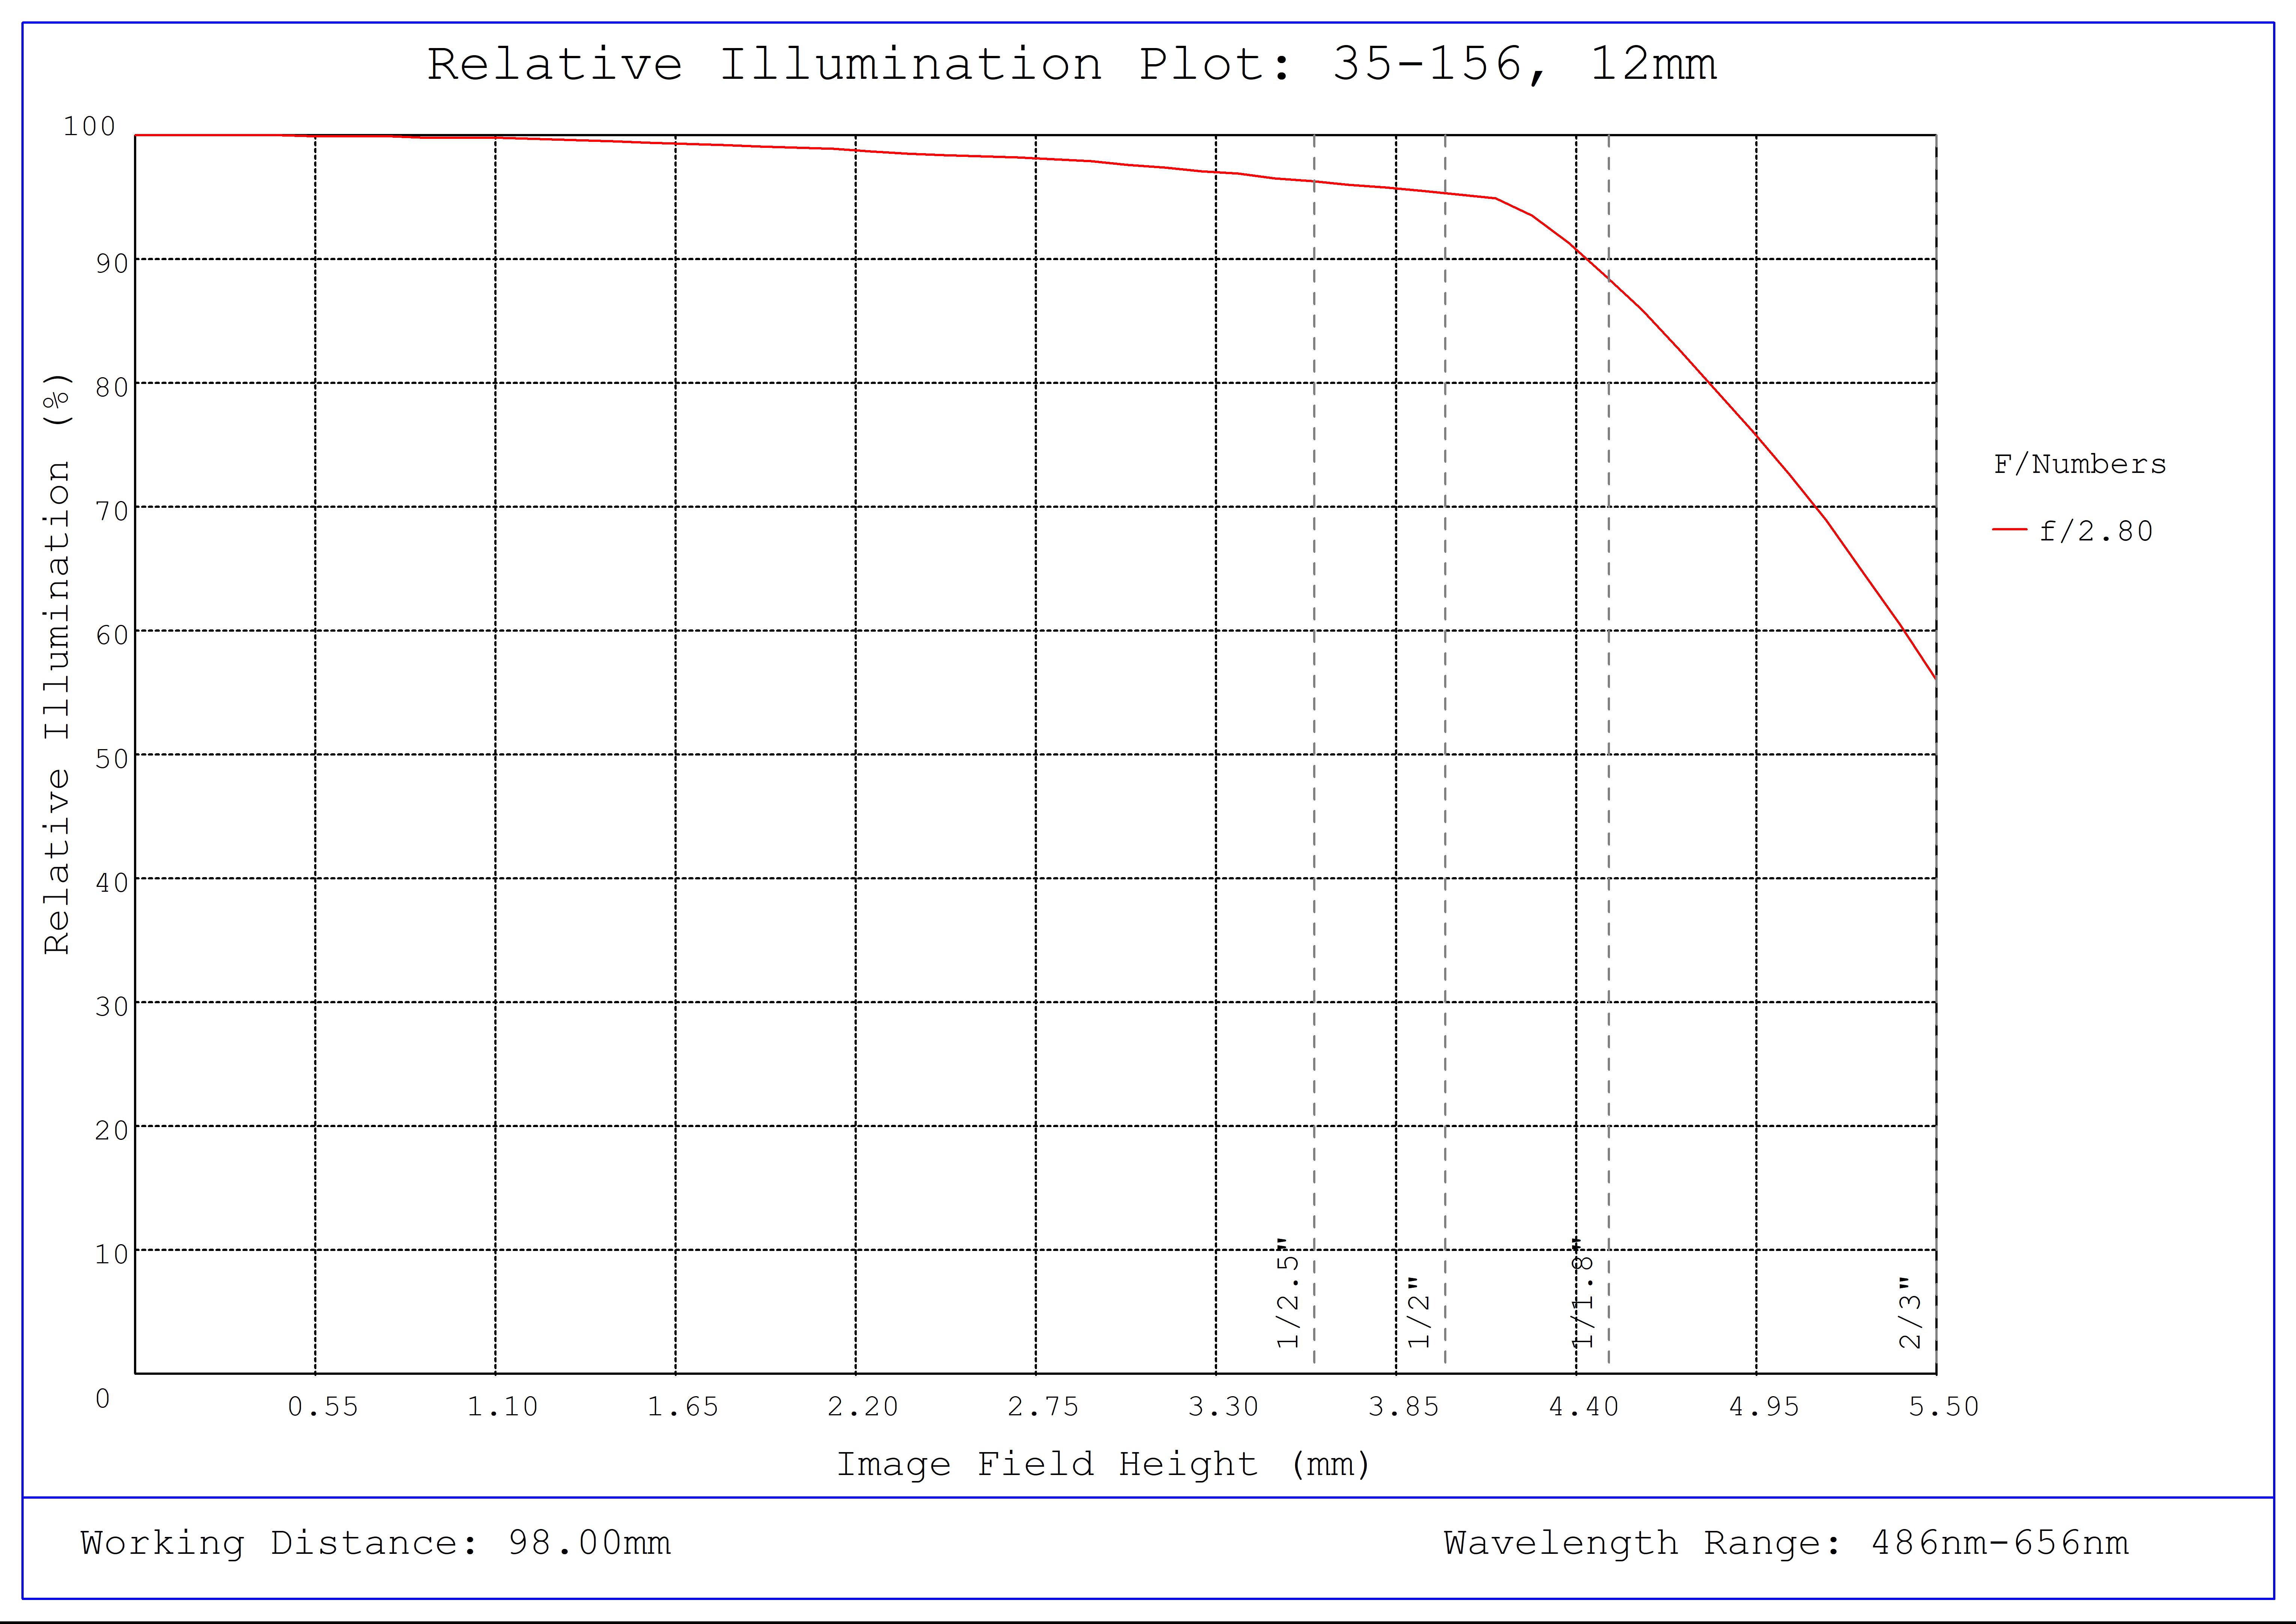 #35-156, 12mm, f/2.8 Cr Series Fixed Focal Length Lens, Relative Illumination Plot